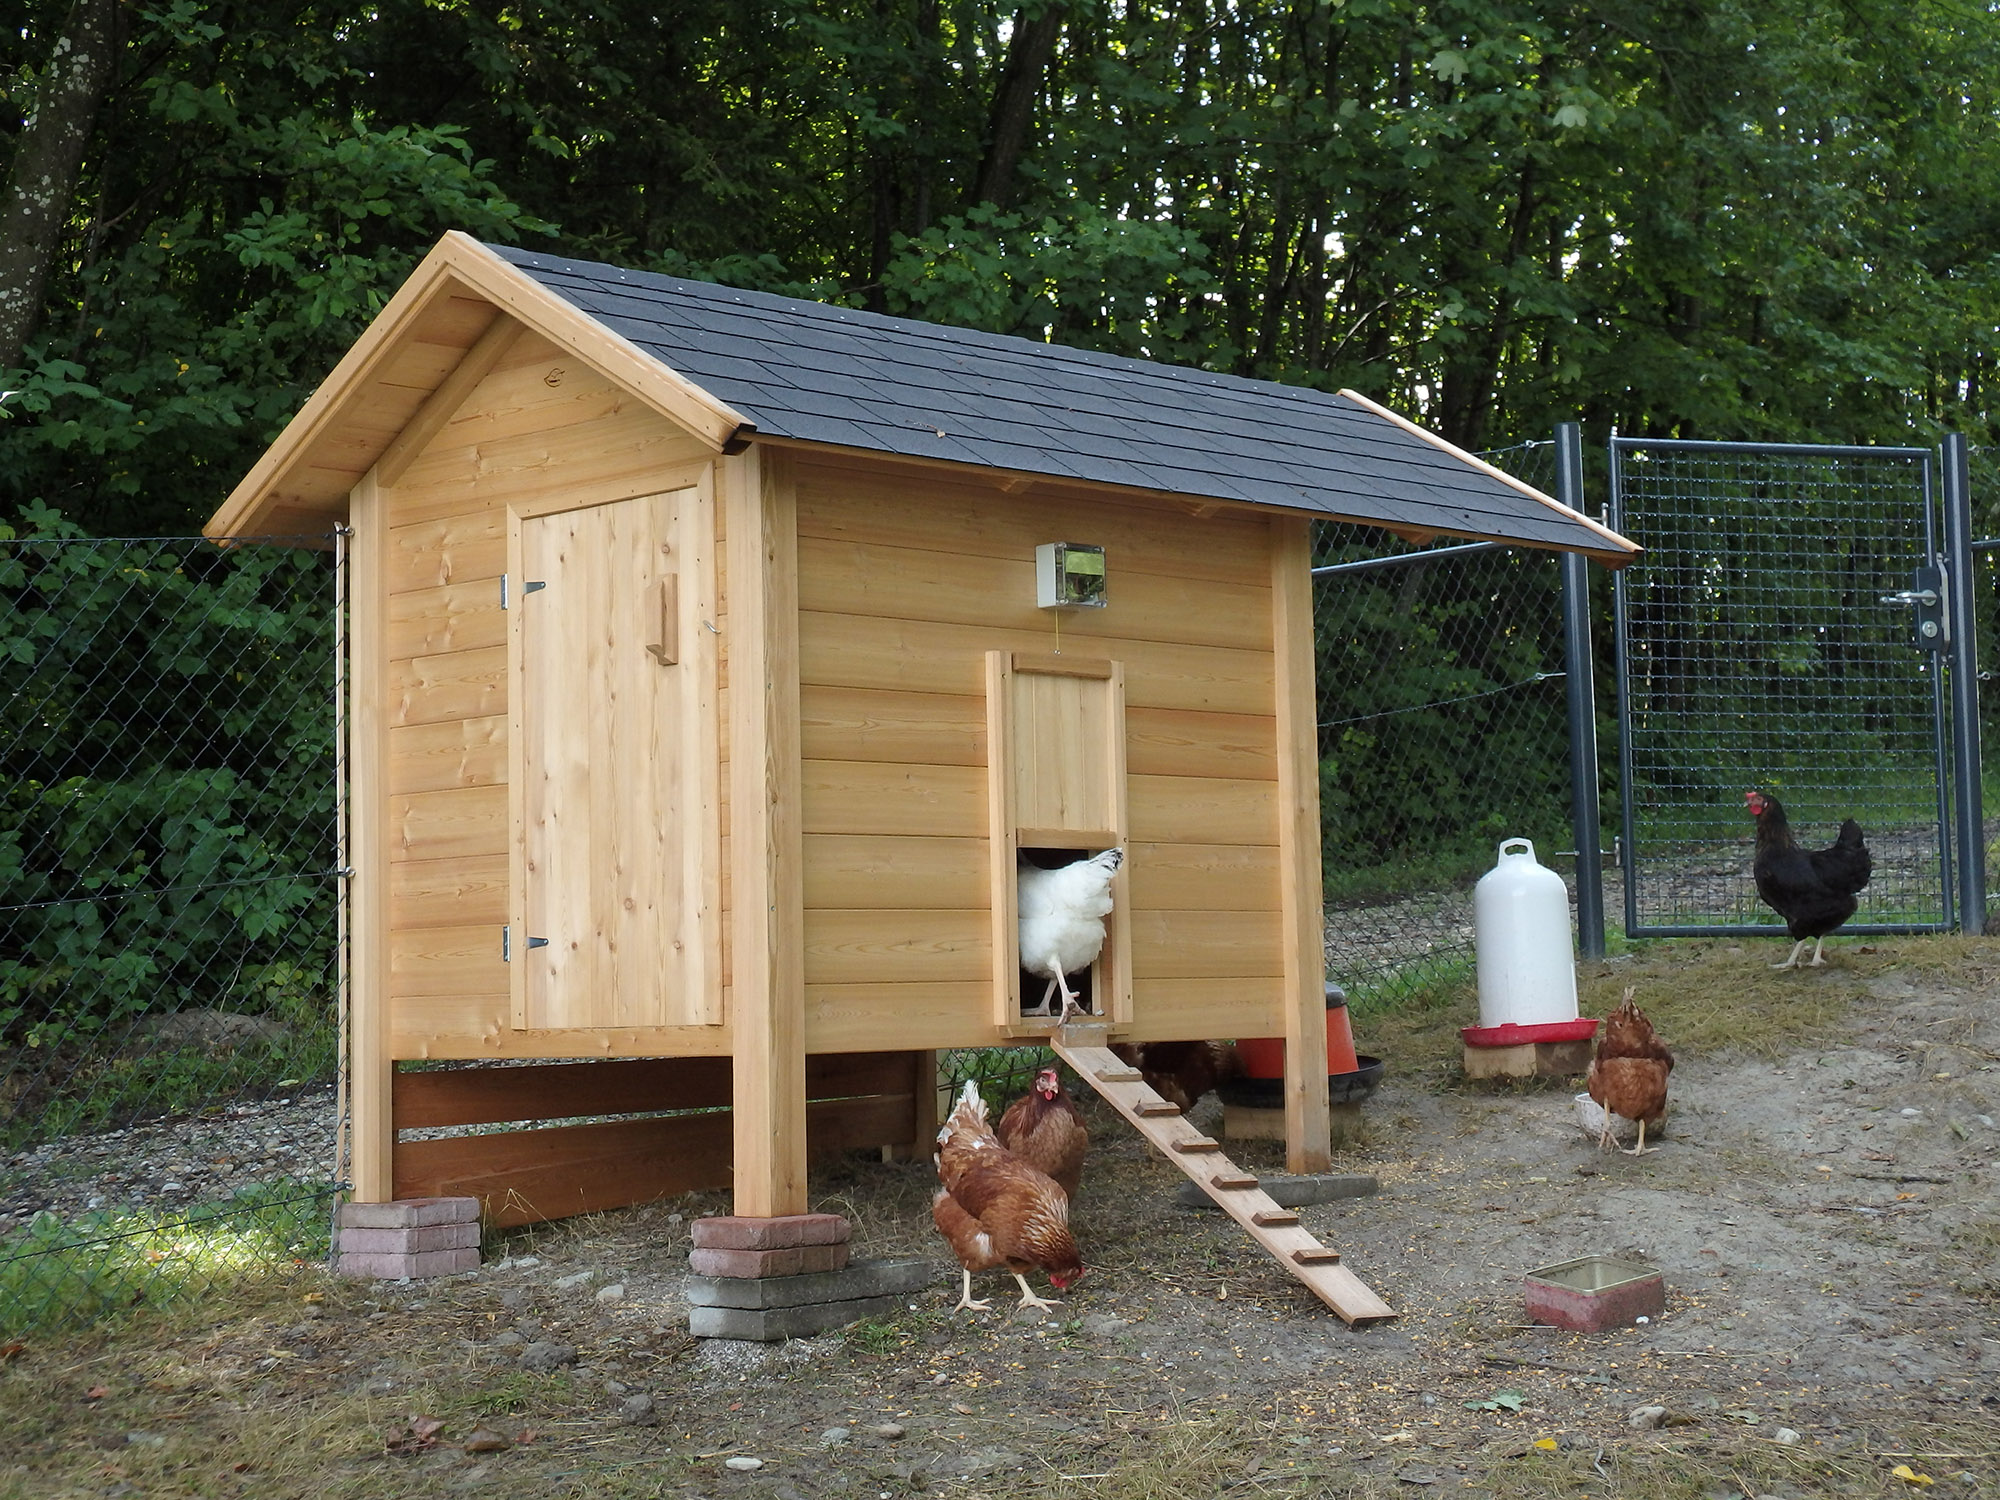 Imagefoto "Hühnerstall Classic" braun mit Hühnern